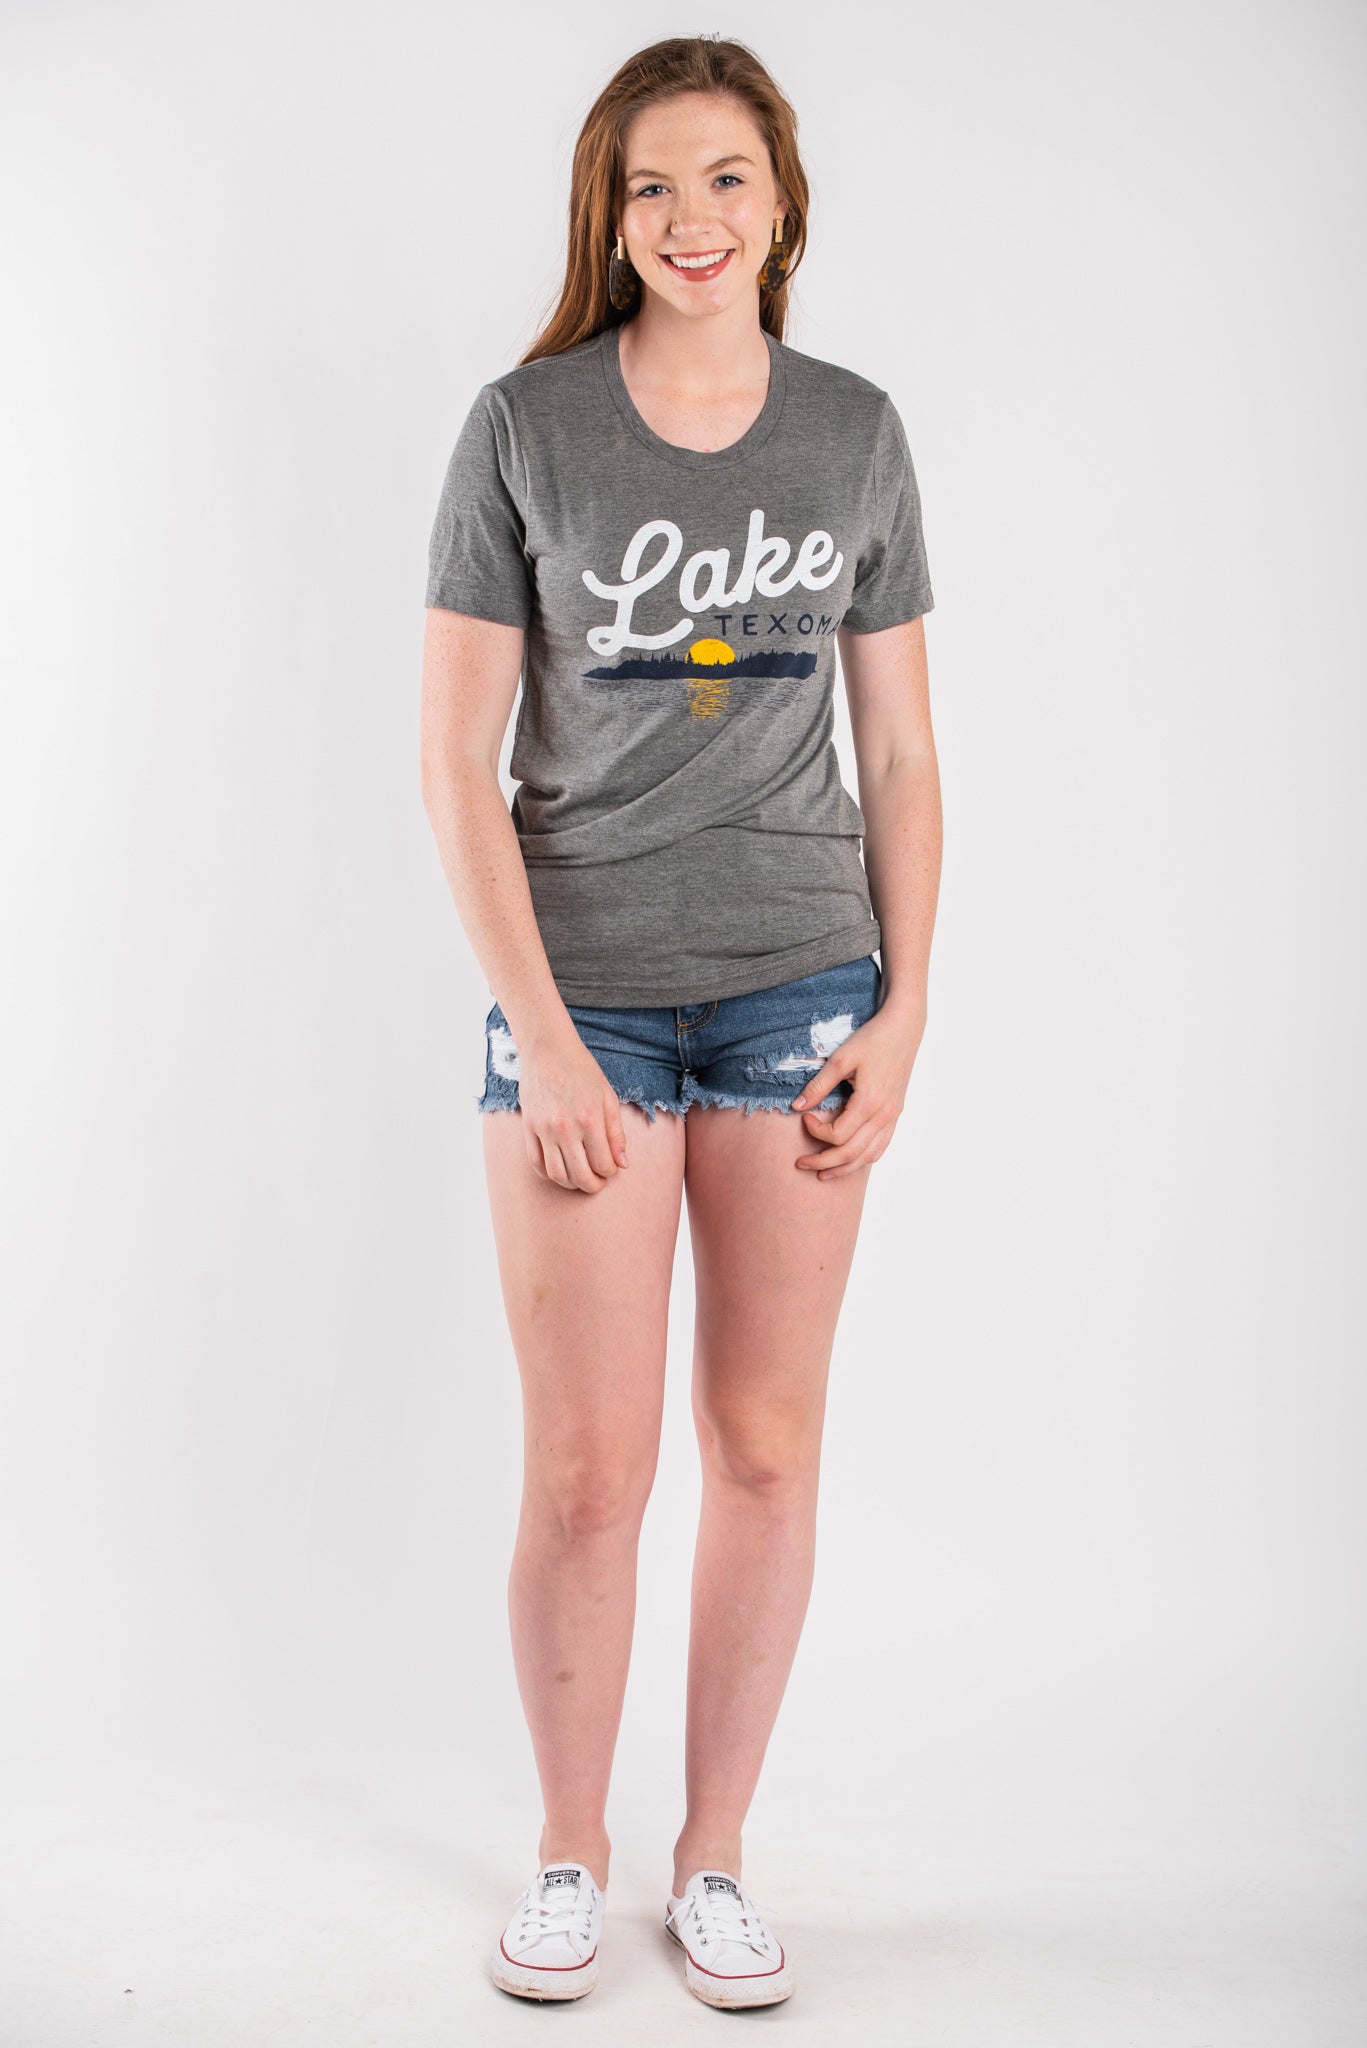 Lake Texoma unisex short sleeve t-shirt grey - DayDreamer Clothing at Lush Fashion Lounge Trendy Boutique in Oklahoma City